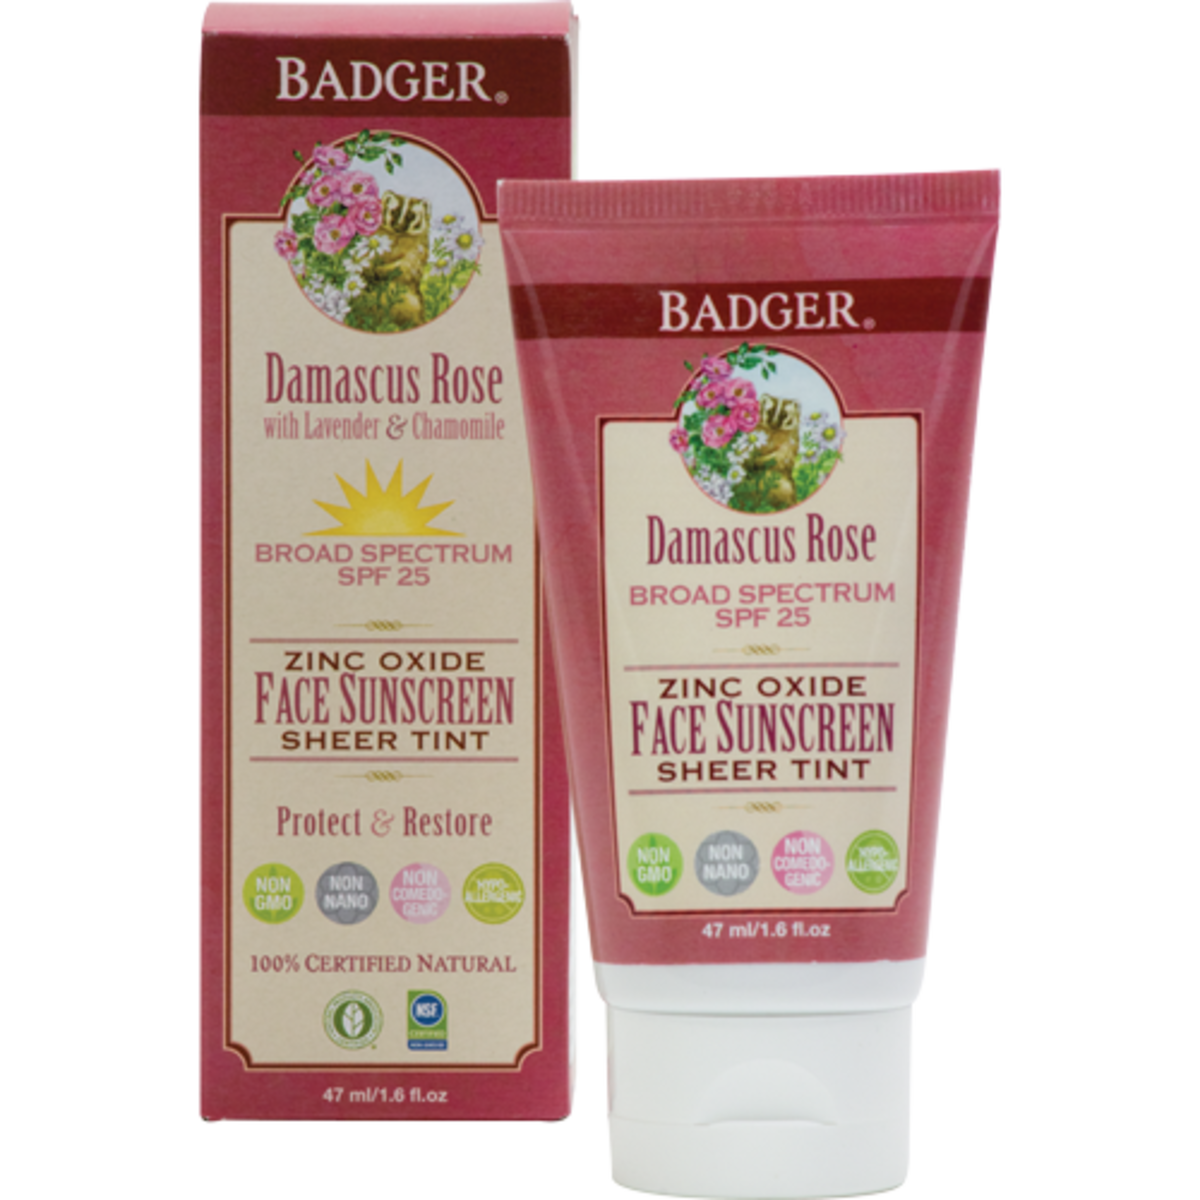 Badger Damascus Rose SPF 25 Sheer Tint Face Sunscreen Lotion